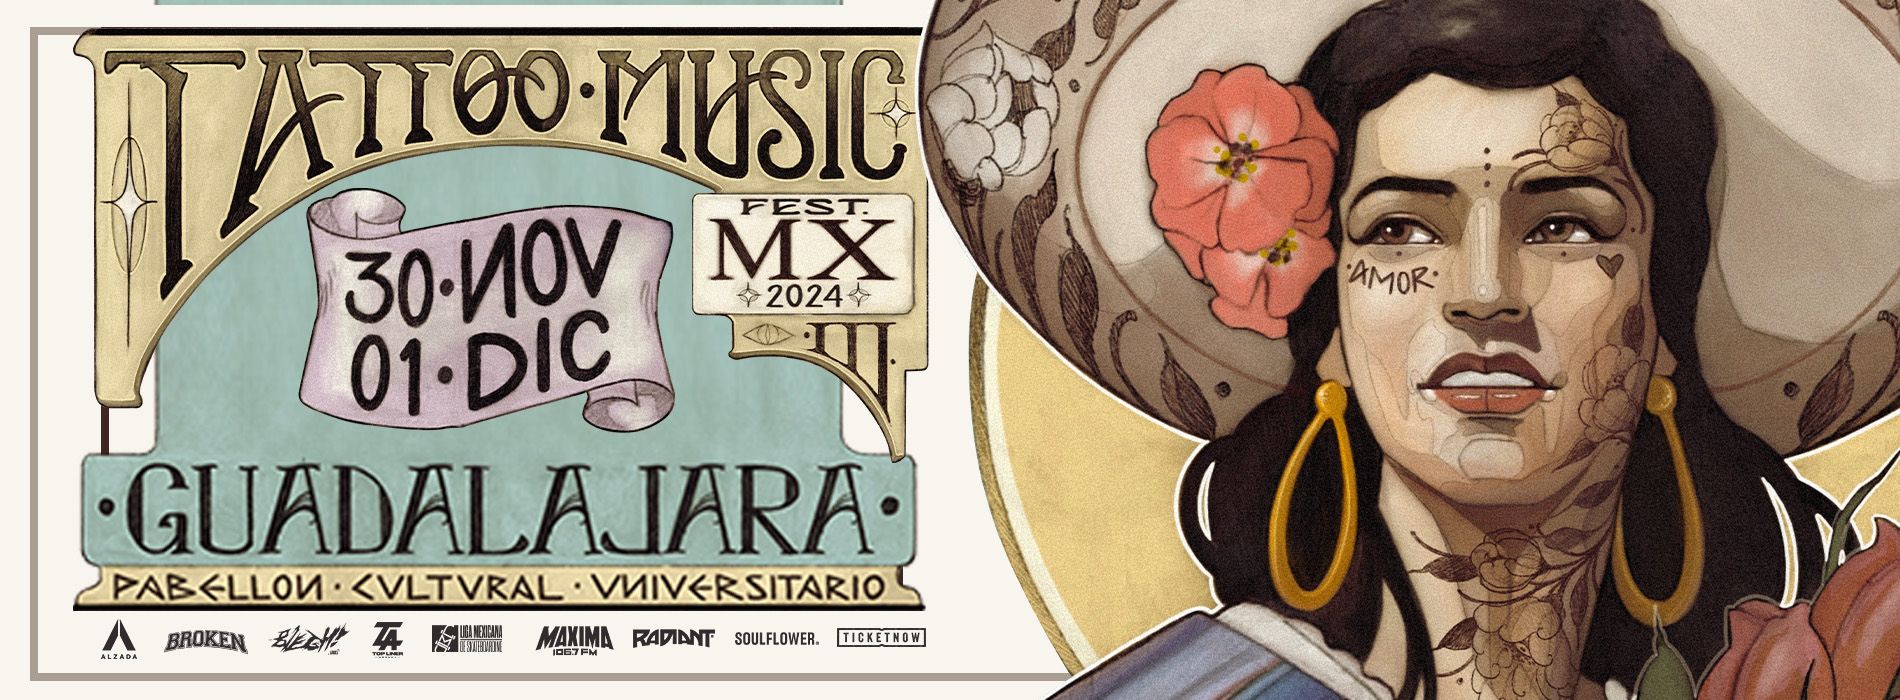 ABONO VIP 2 DIAS | TATTOO MUSIC FEST MX 2024